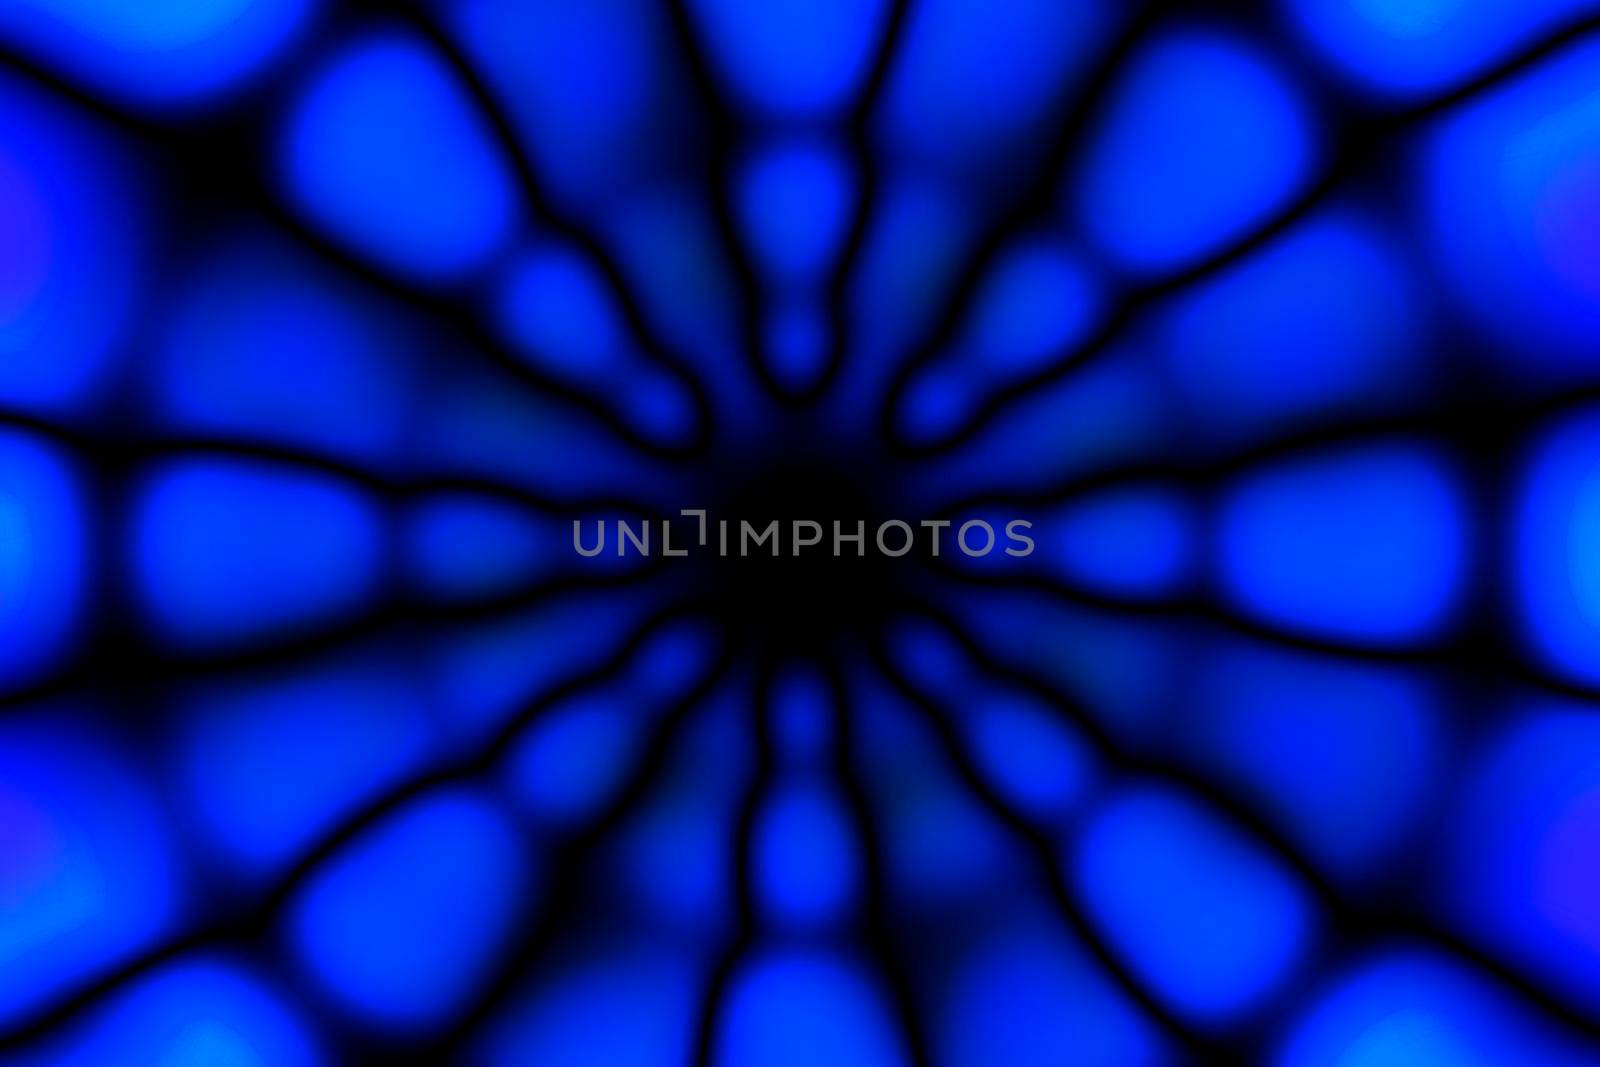 Deep blue, blue and black circle radial pattern